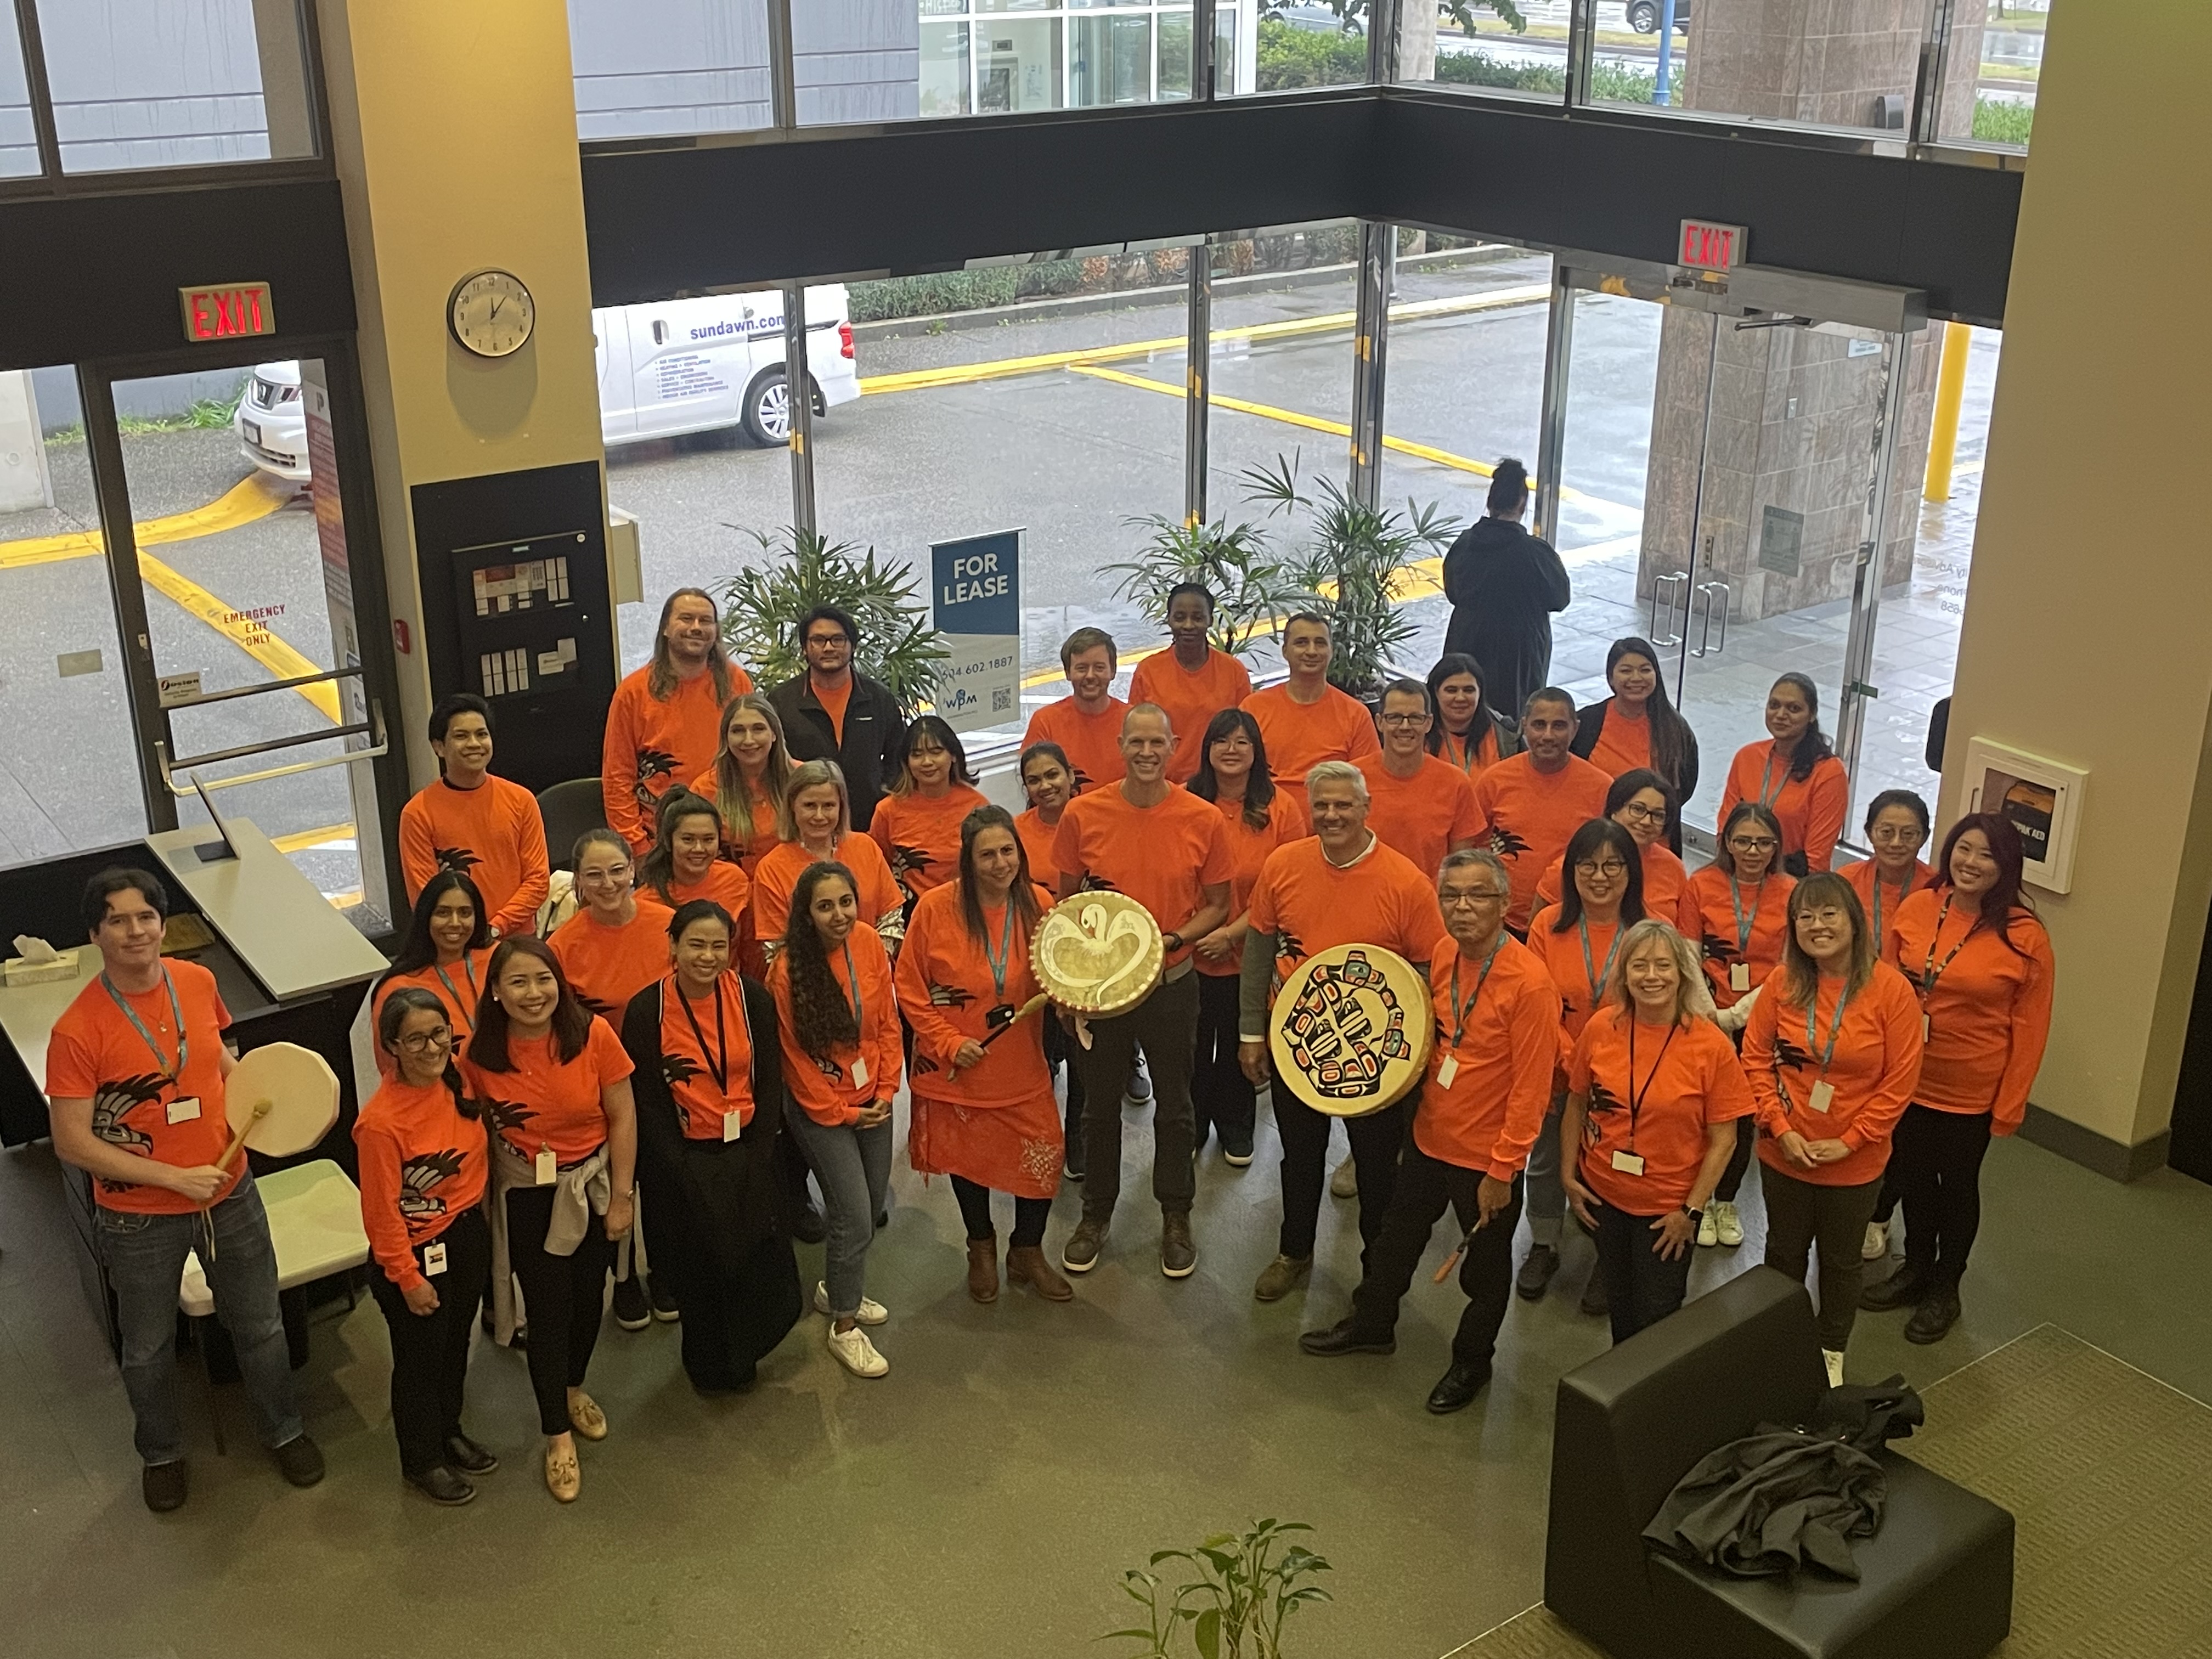 Staff in lobby wearing orange shirts